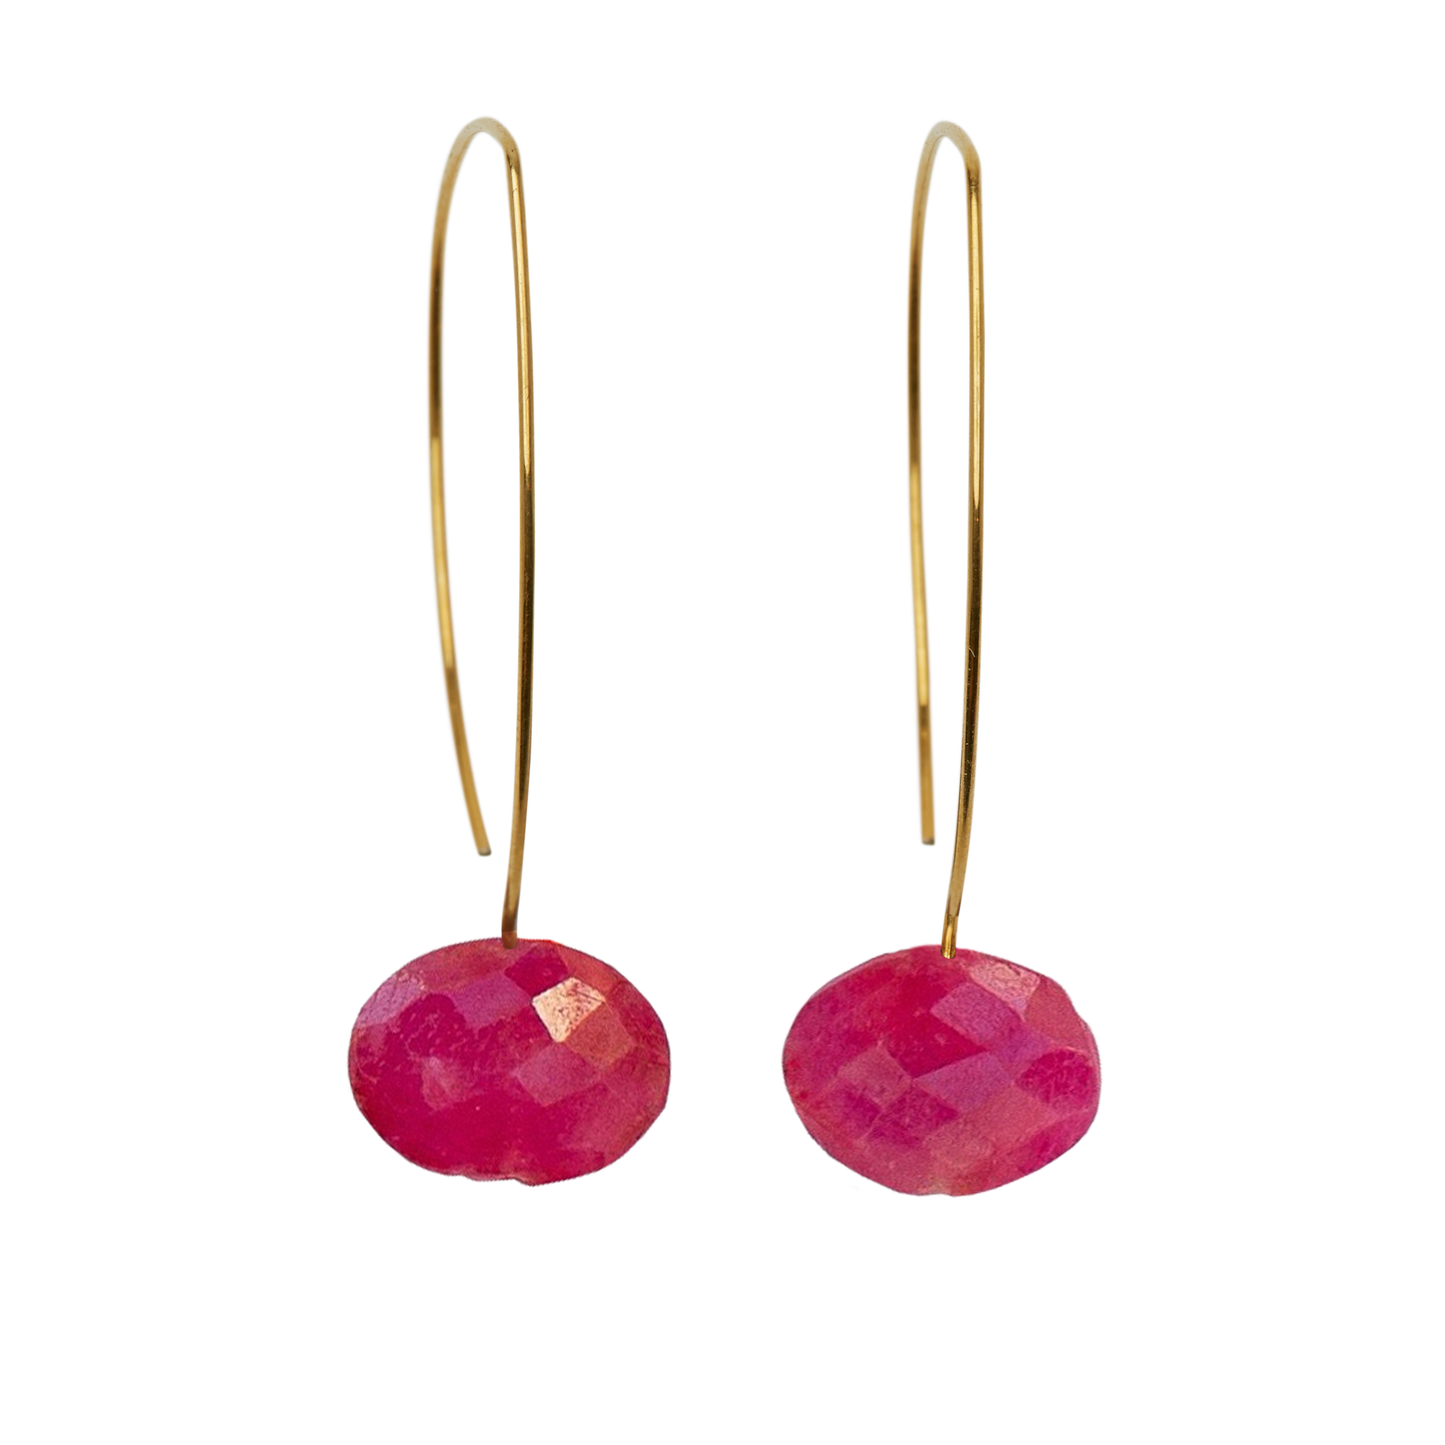 Drop Earrings with hand-cut precious gems